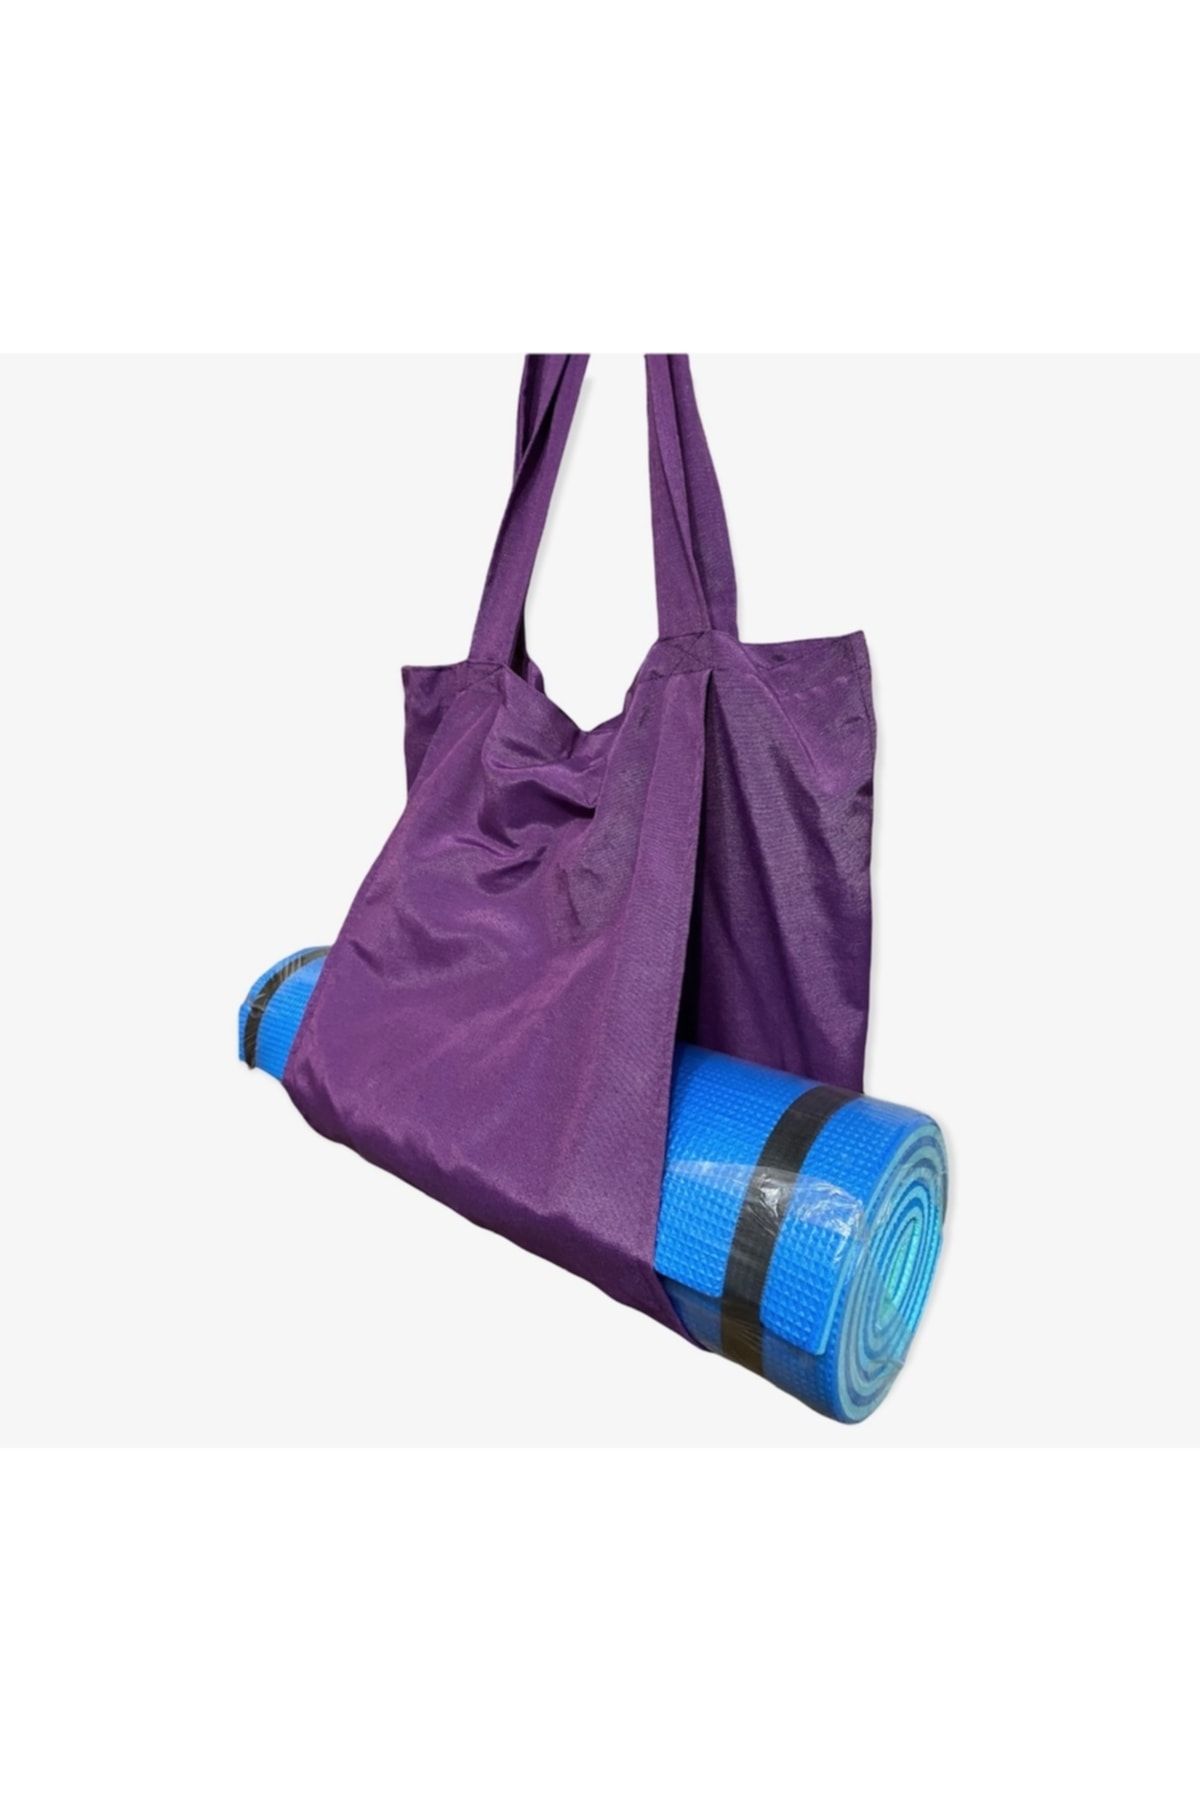 REMEGE Yoga Mat Carrying Bag - Mat Carrying Bag - Mat Hanging Bag - Trendyol